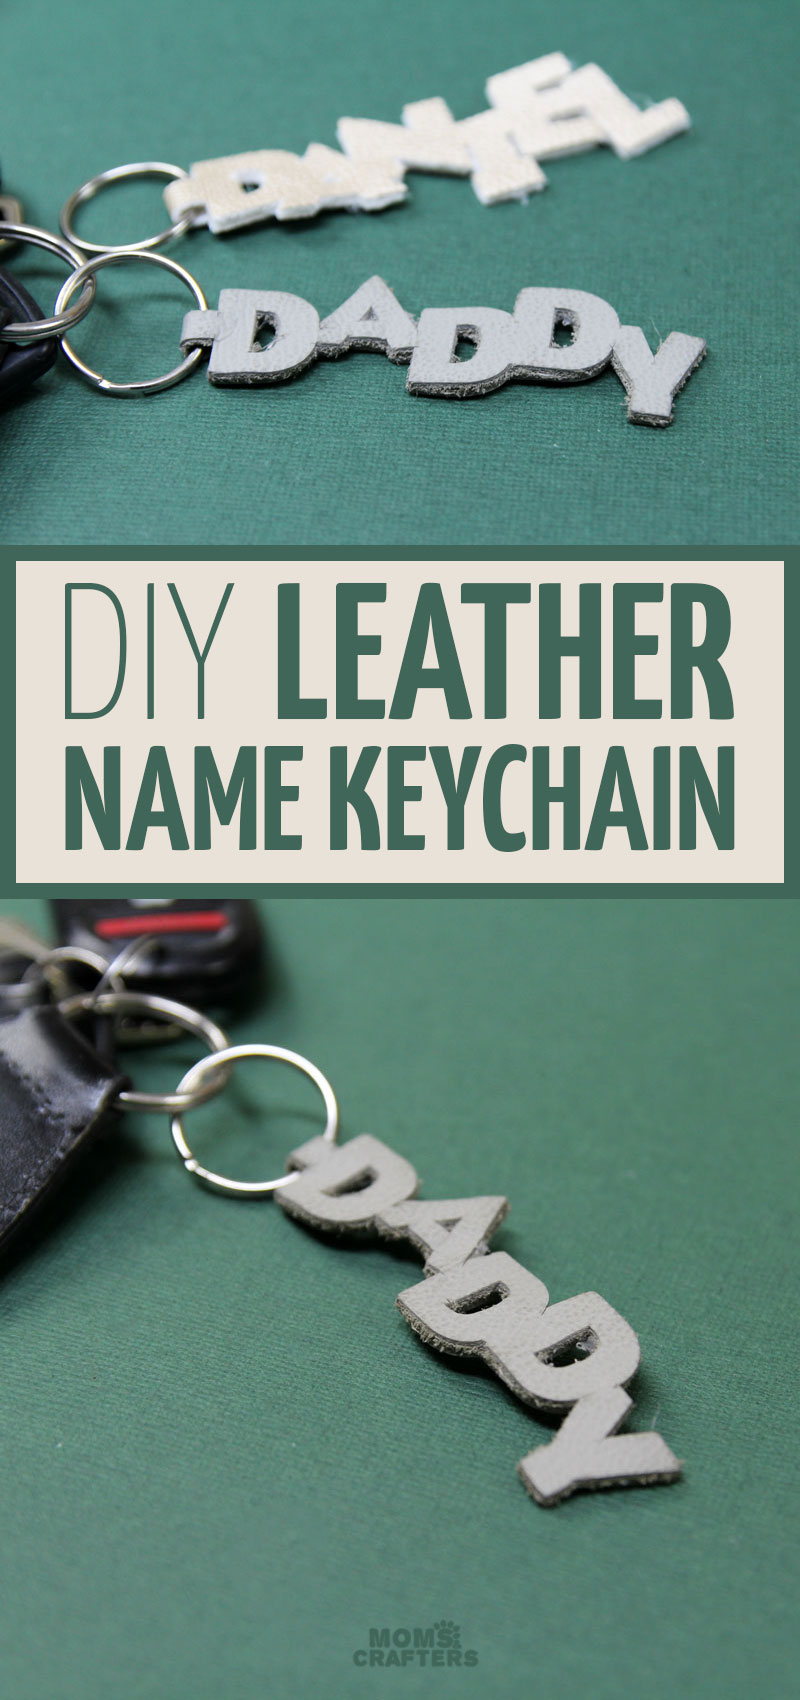 Customize PU Leather Wrist Strap Initial Key Chain